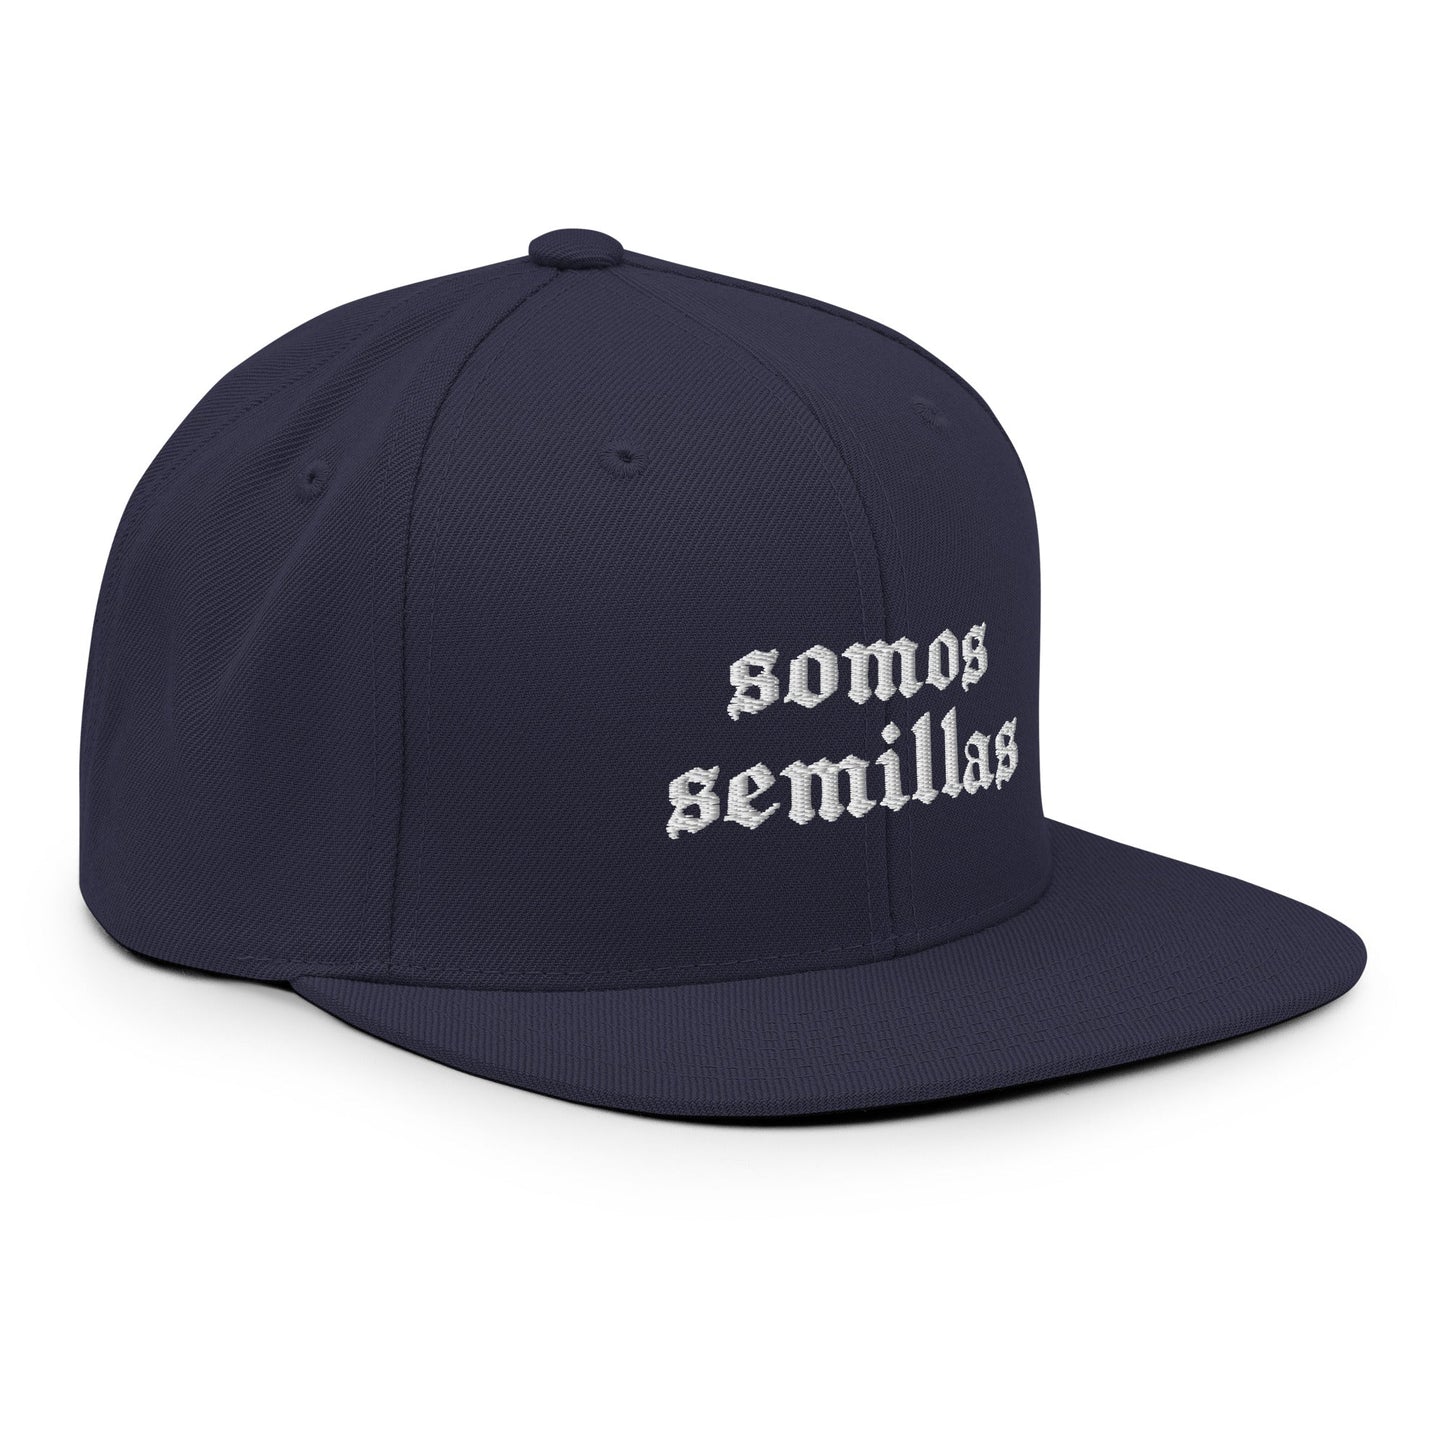 Somos Semillas - Embroidered Snapback Hat